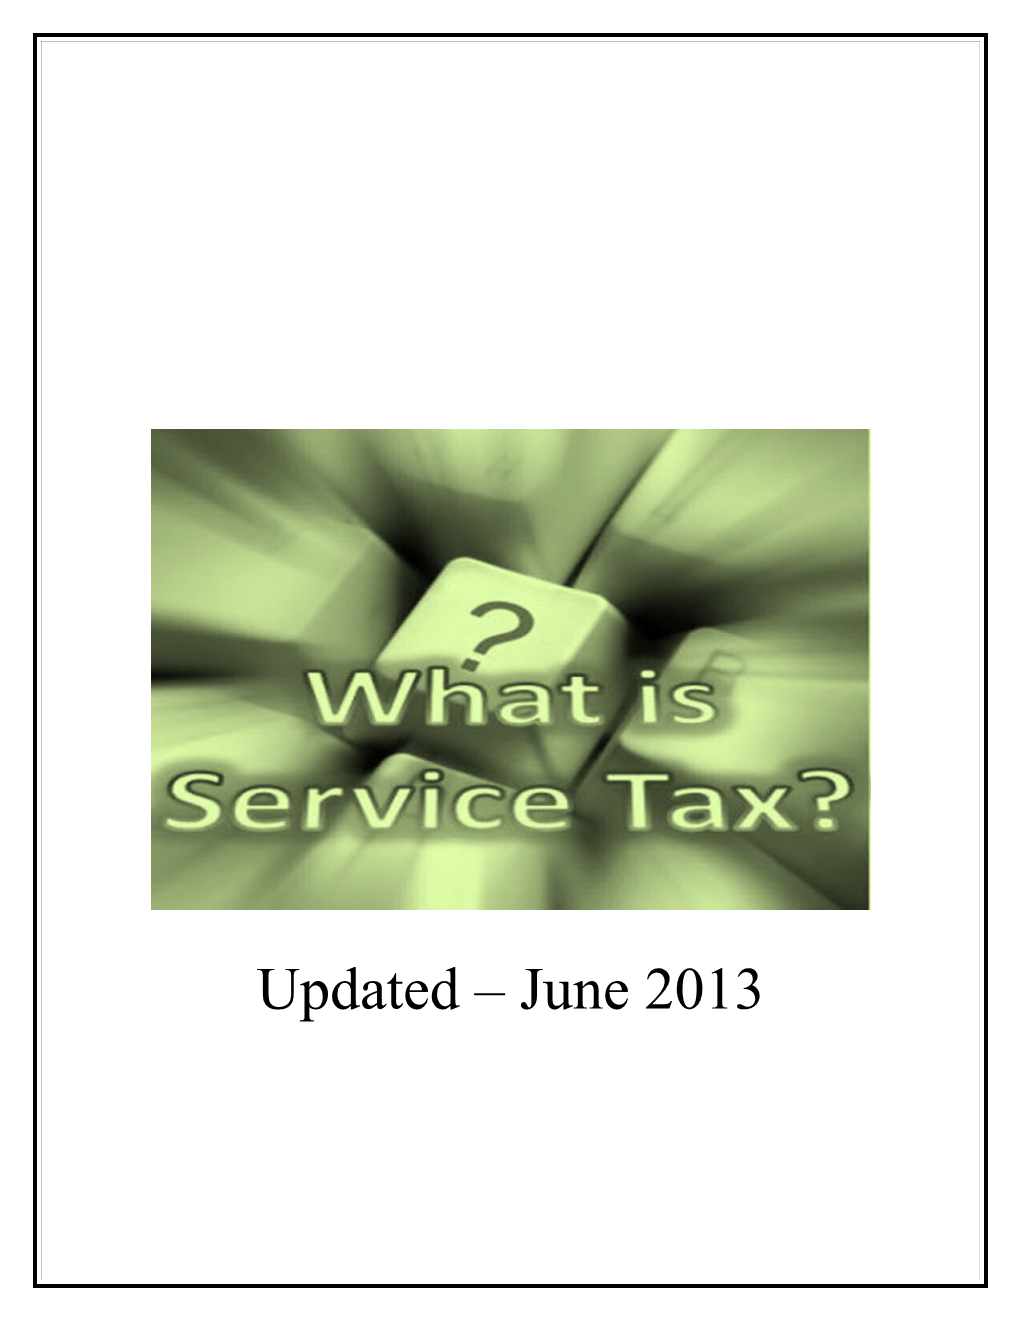 Service Tax Concepts